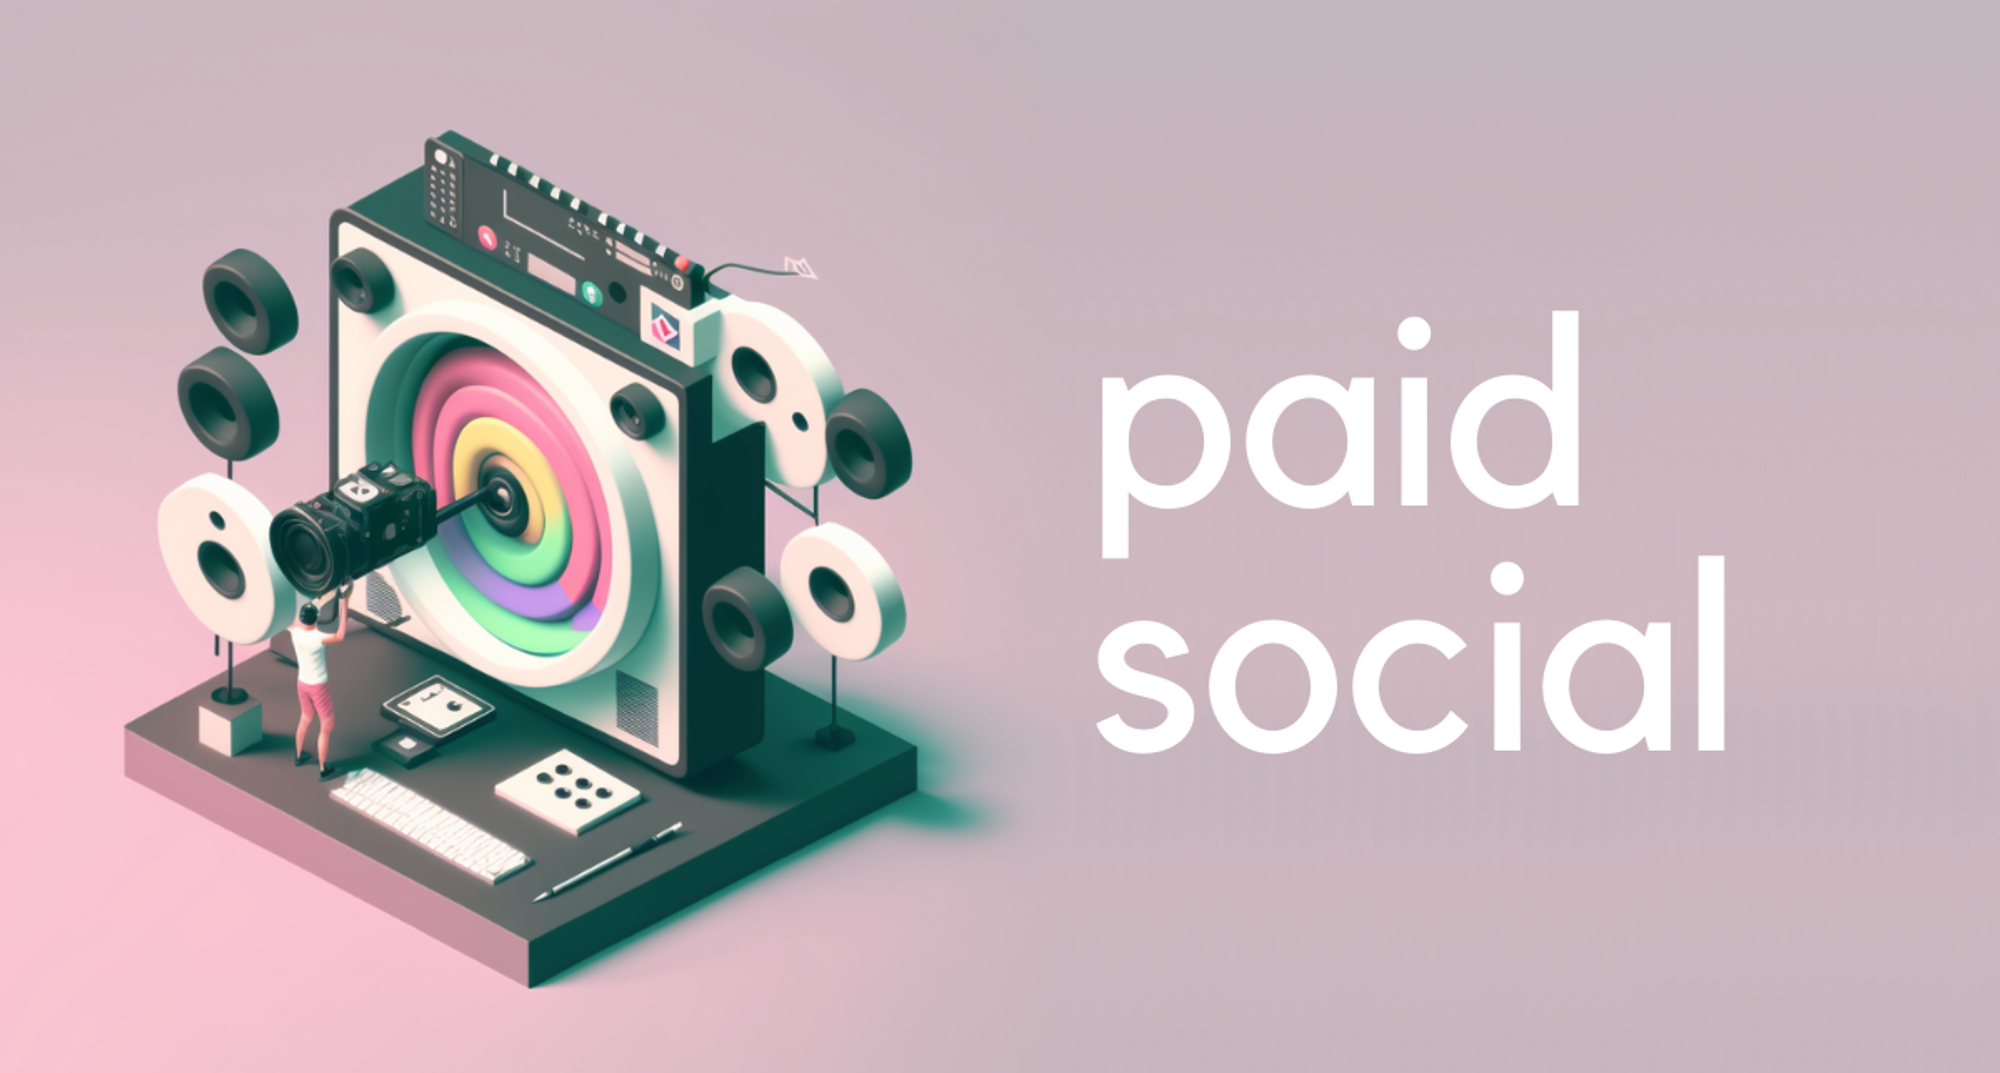 Paid social